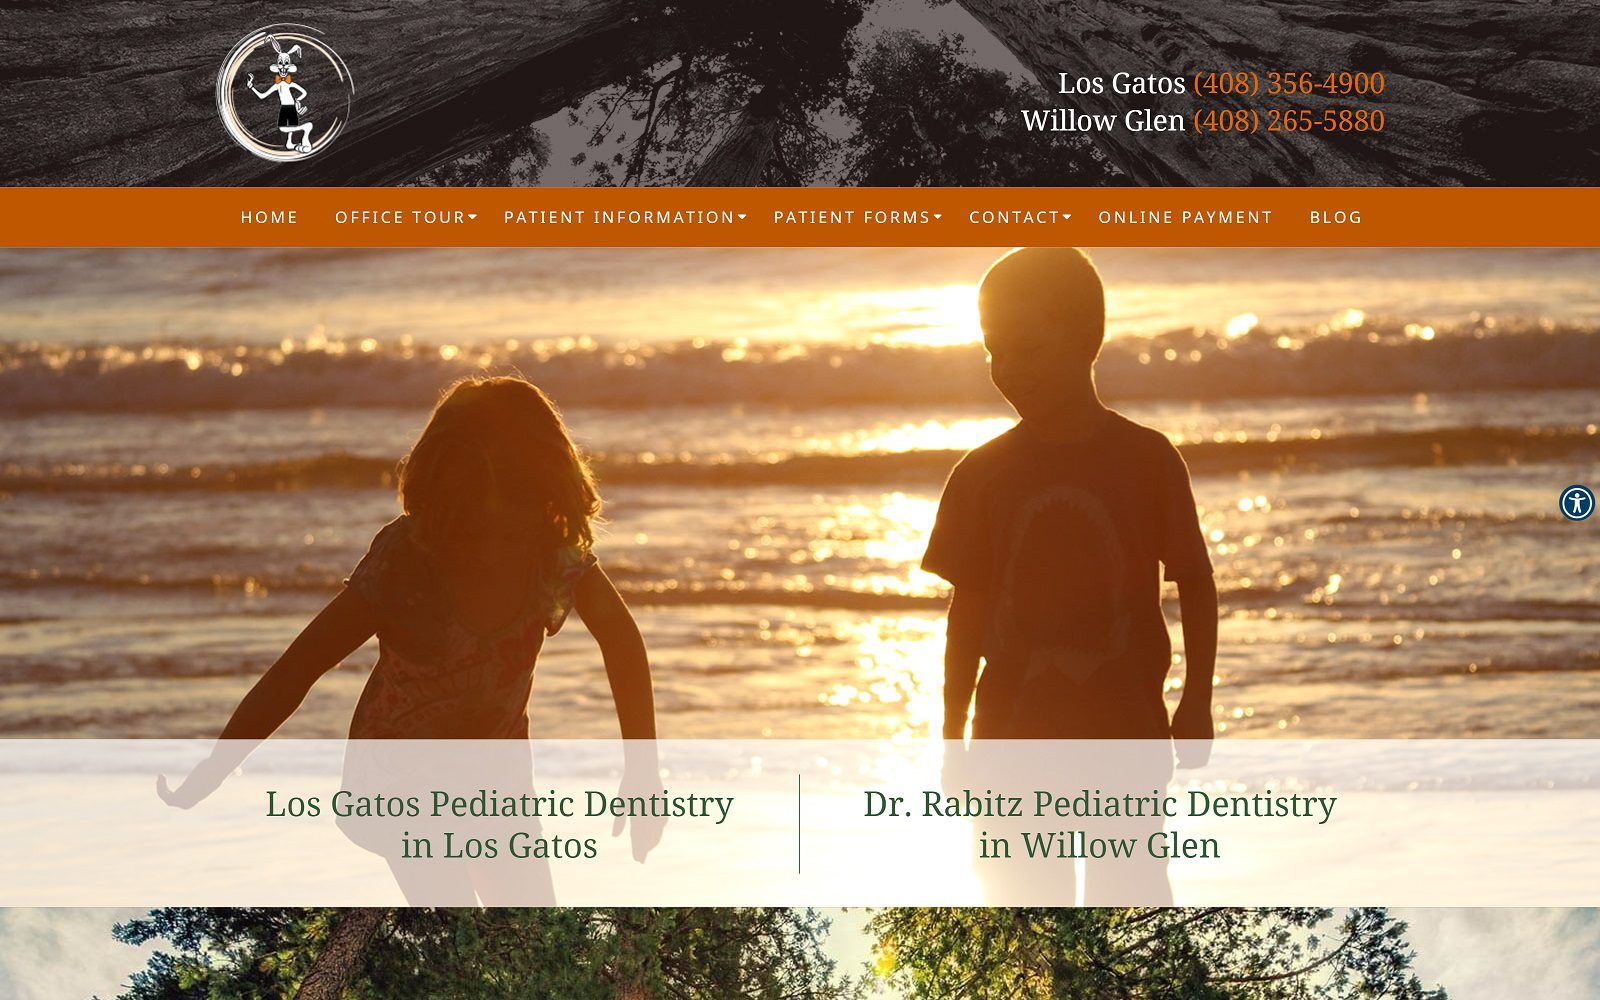 The screenshot of dr. Rabitz pediatric dentistry website